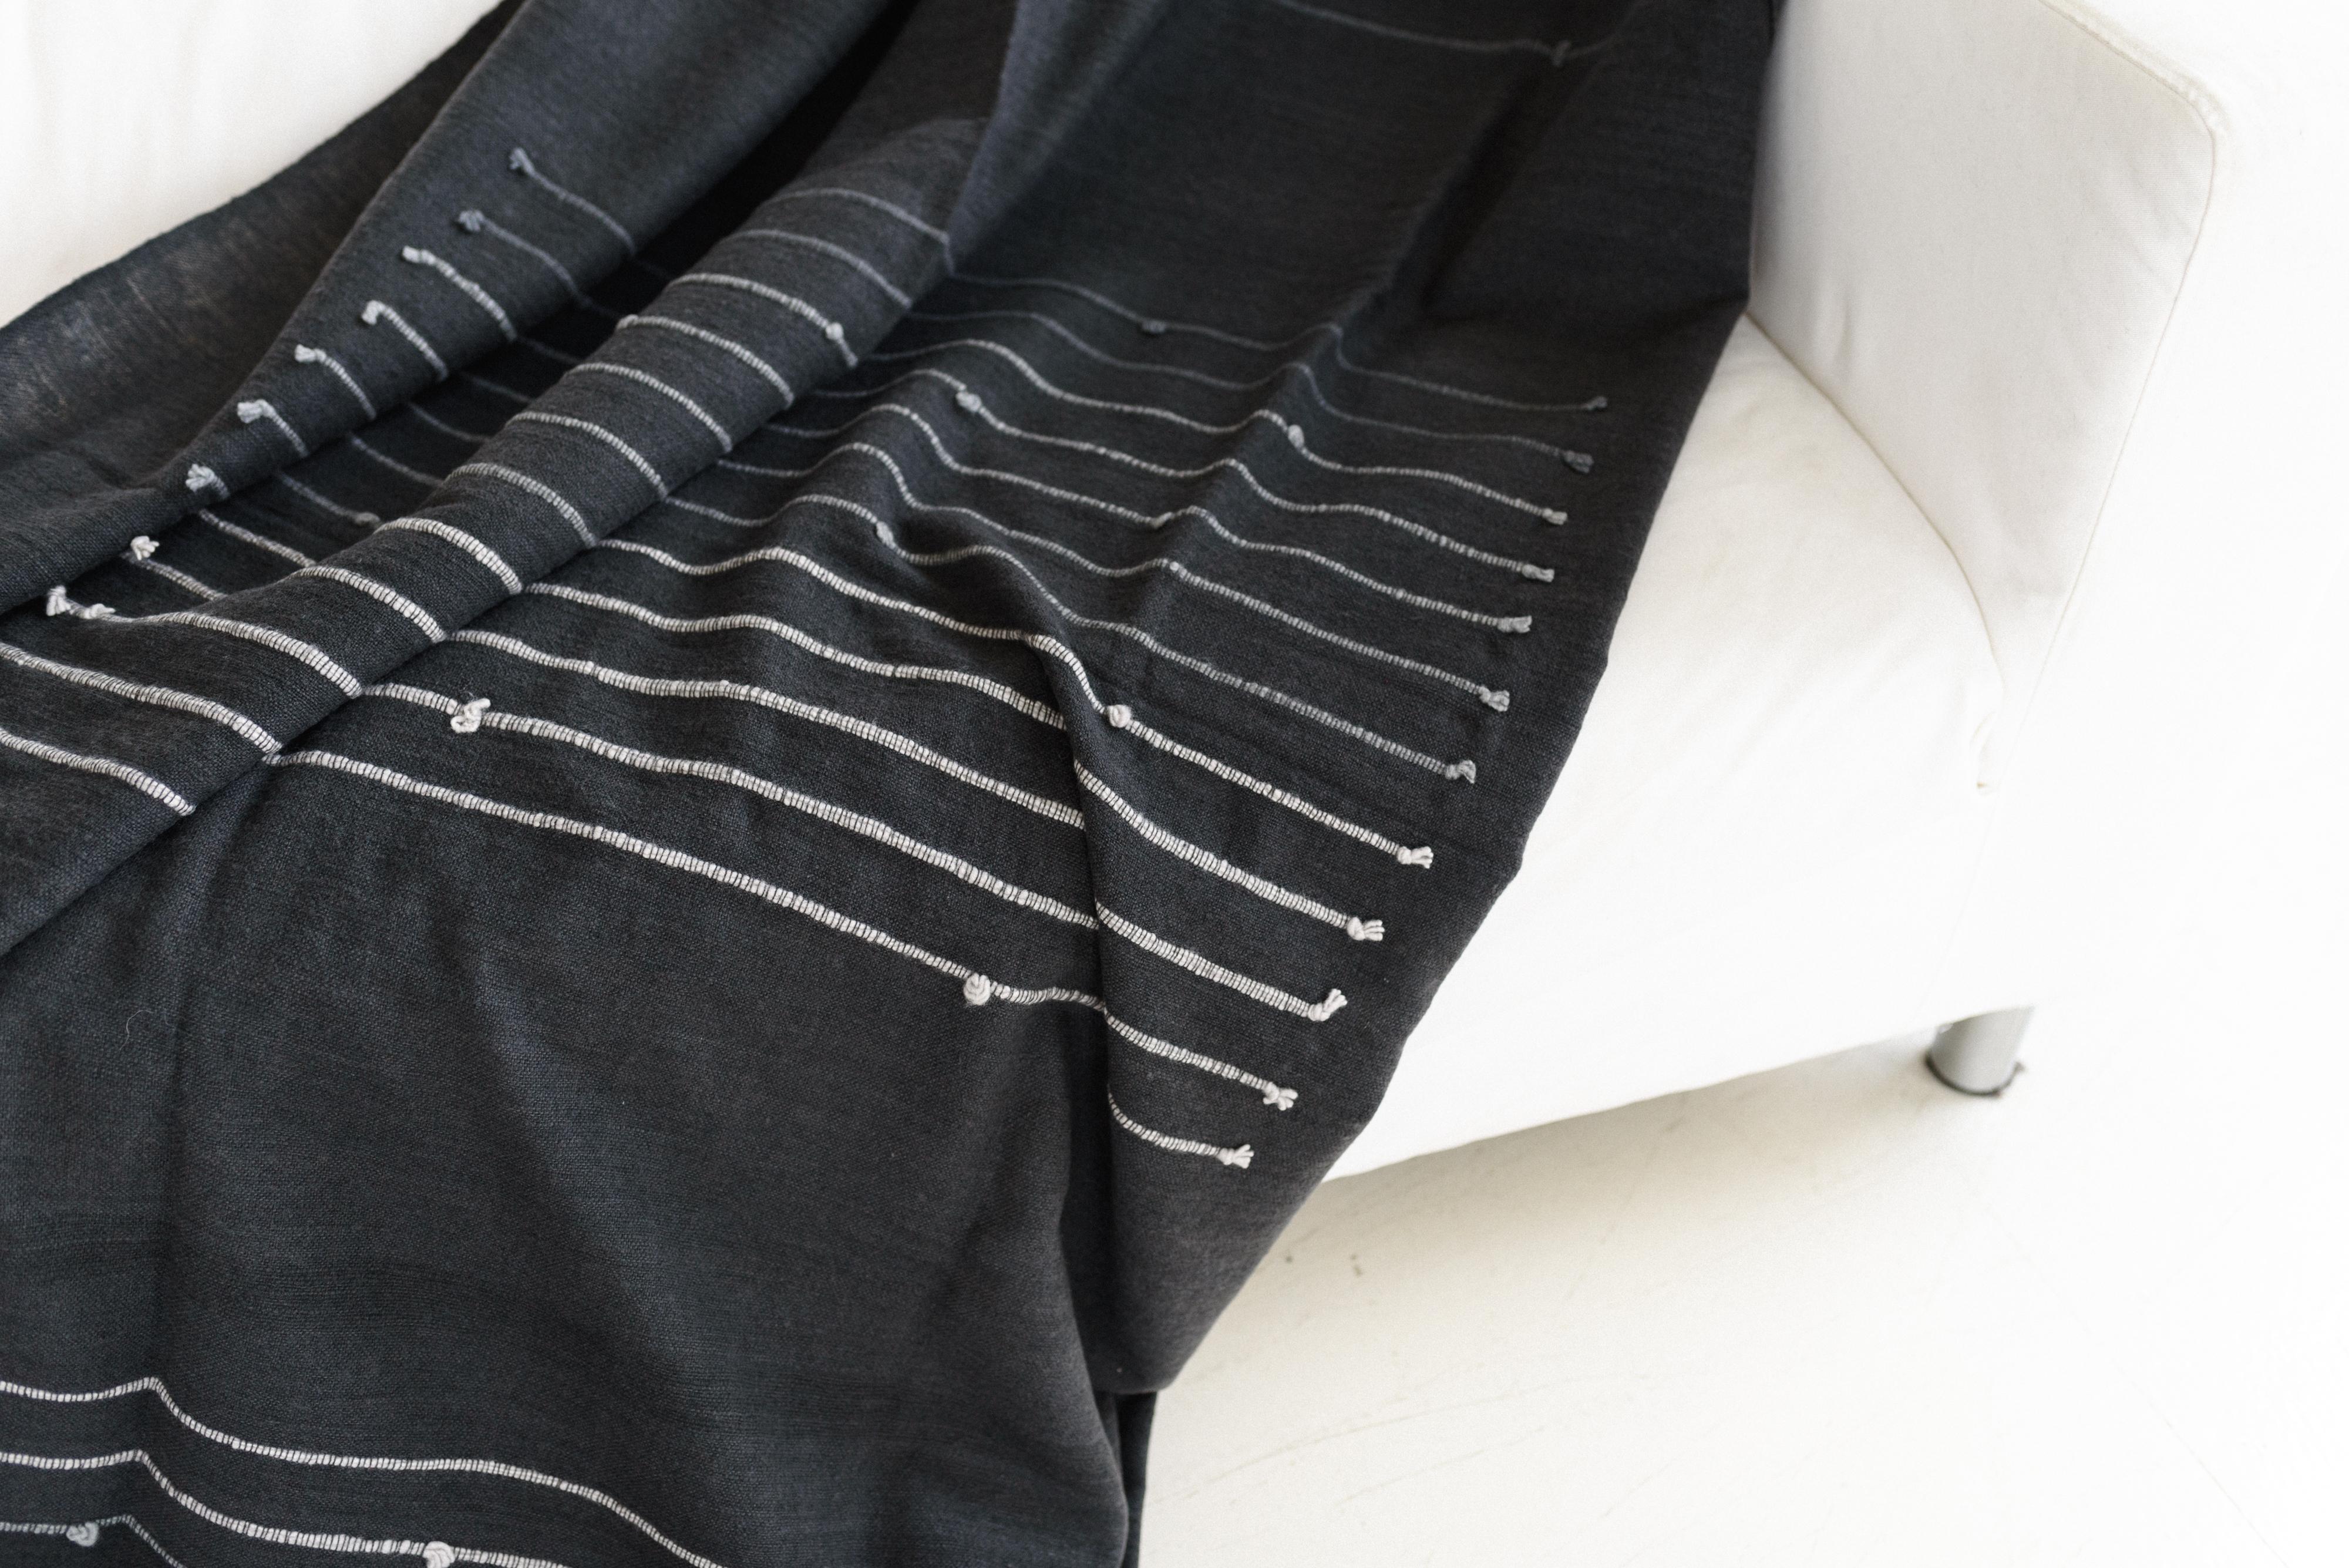  Alei Handloom Throw / Blanket In Charcoal Black , Stripes Pattern  For Sale 1